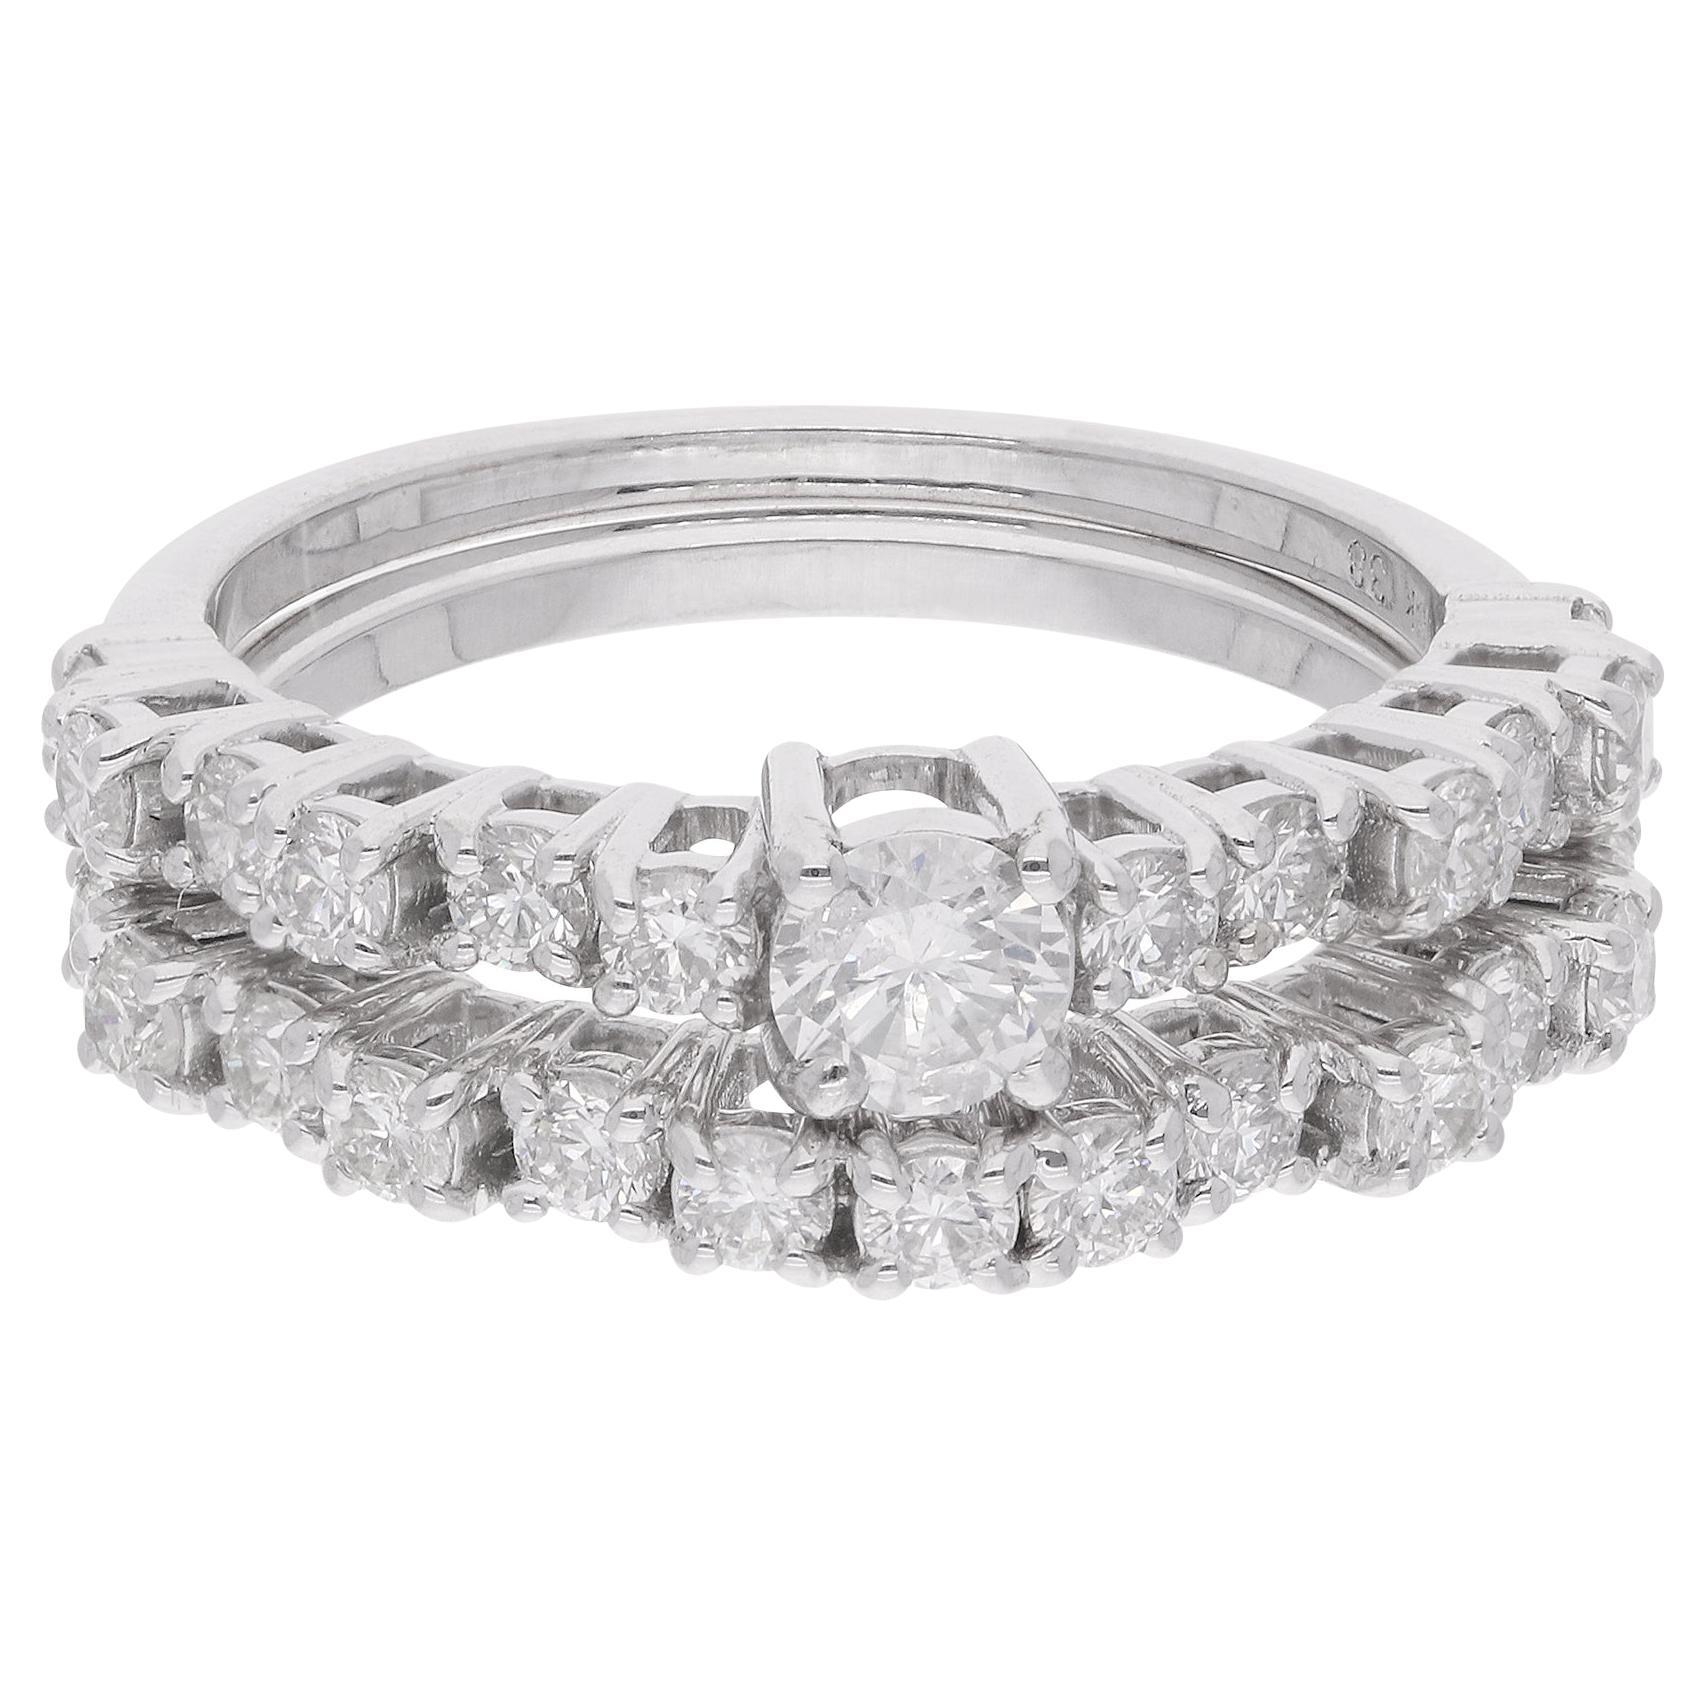 1.15 Carat Diamond Stackable Ring Set 18 Karat White Gold Handmade Fine Jewelry For Sale